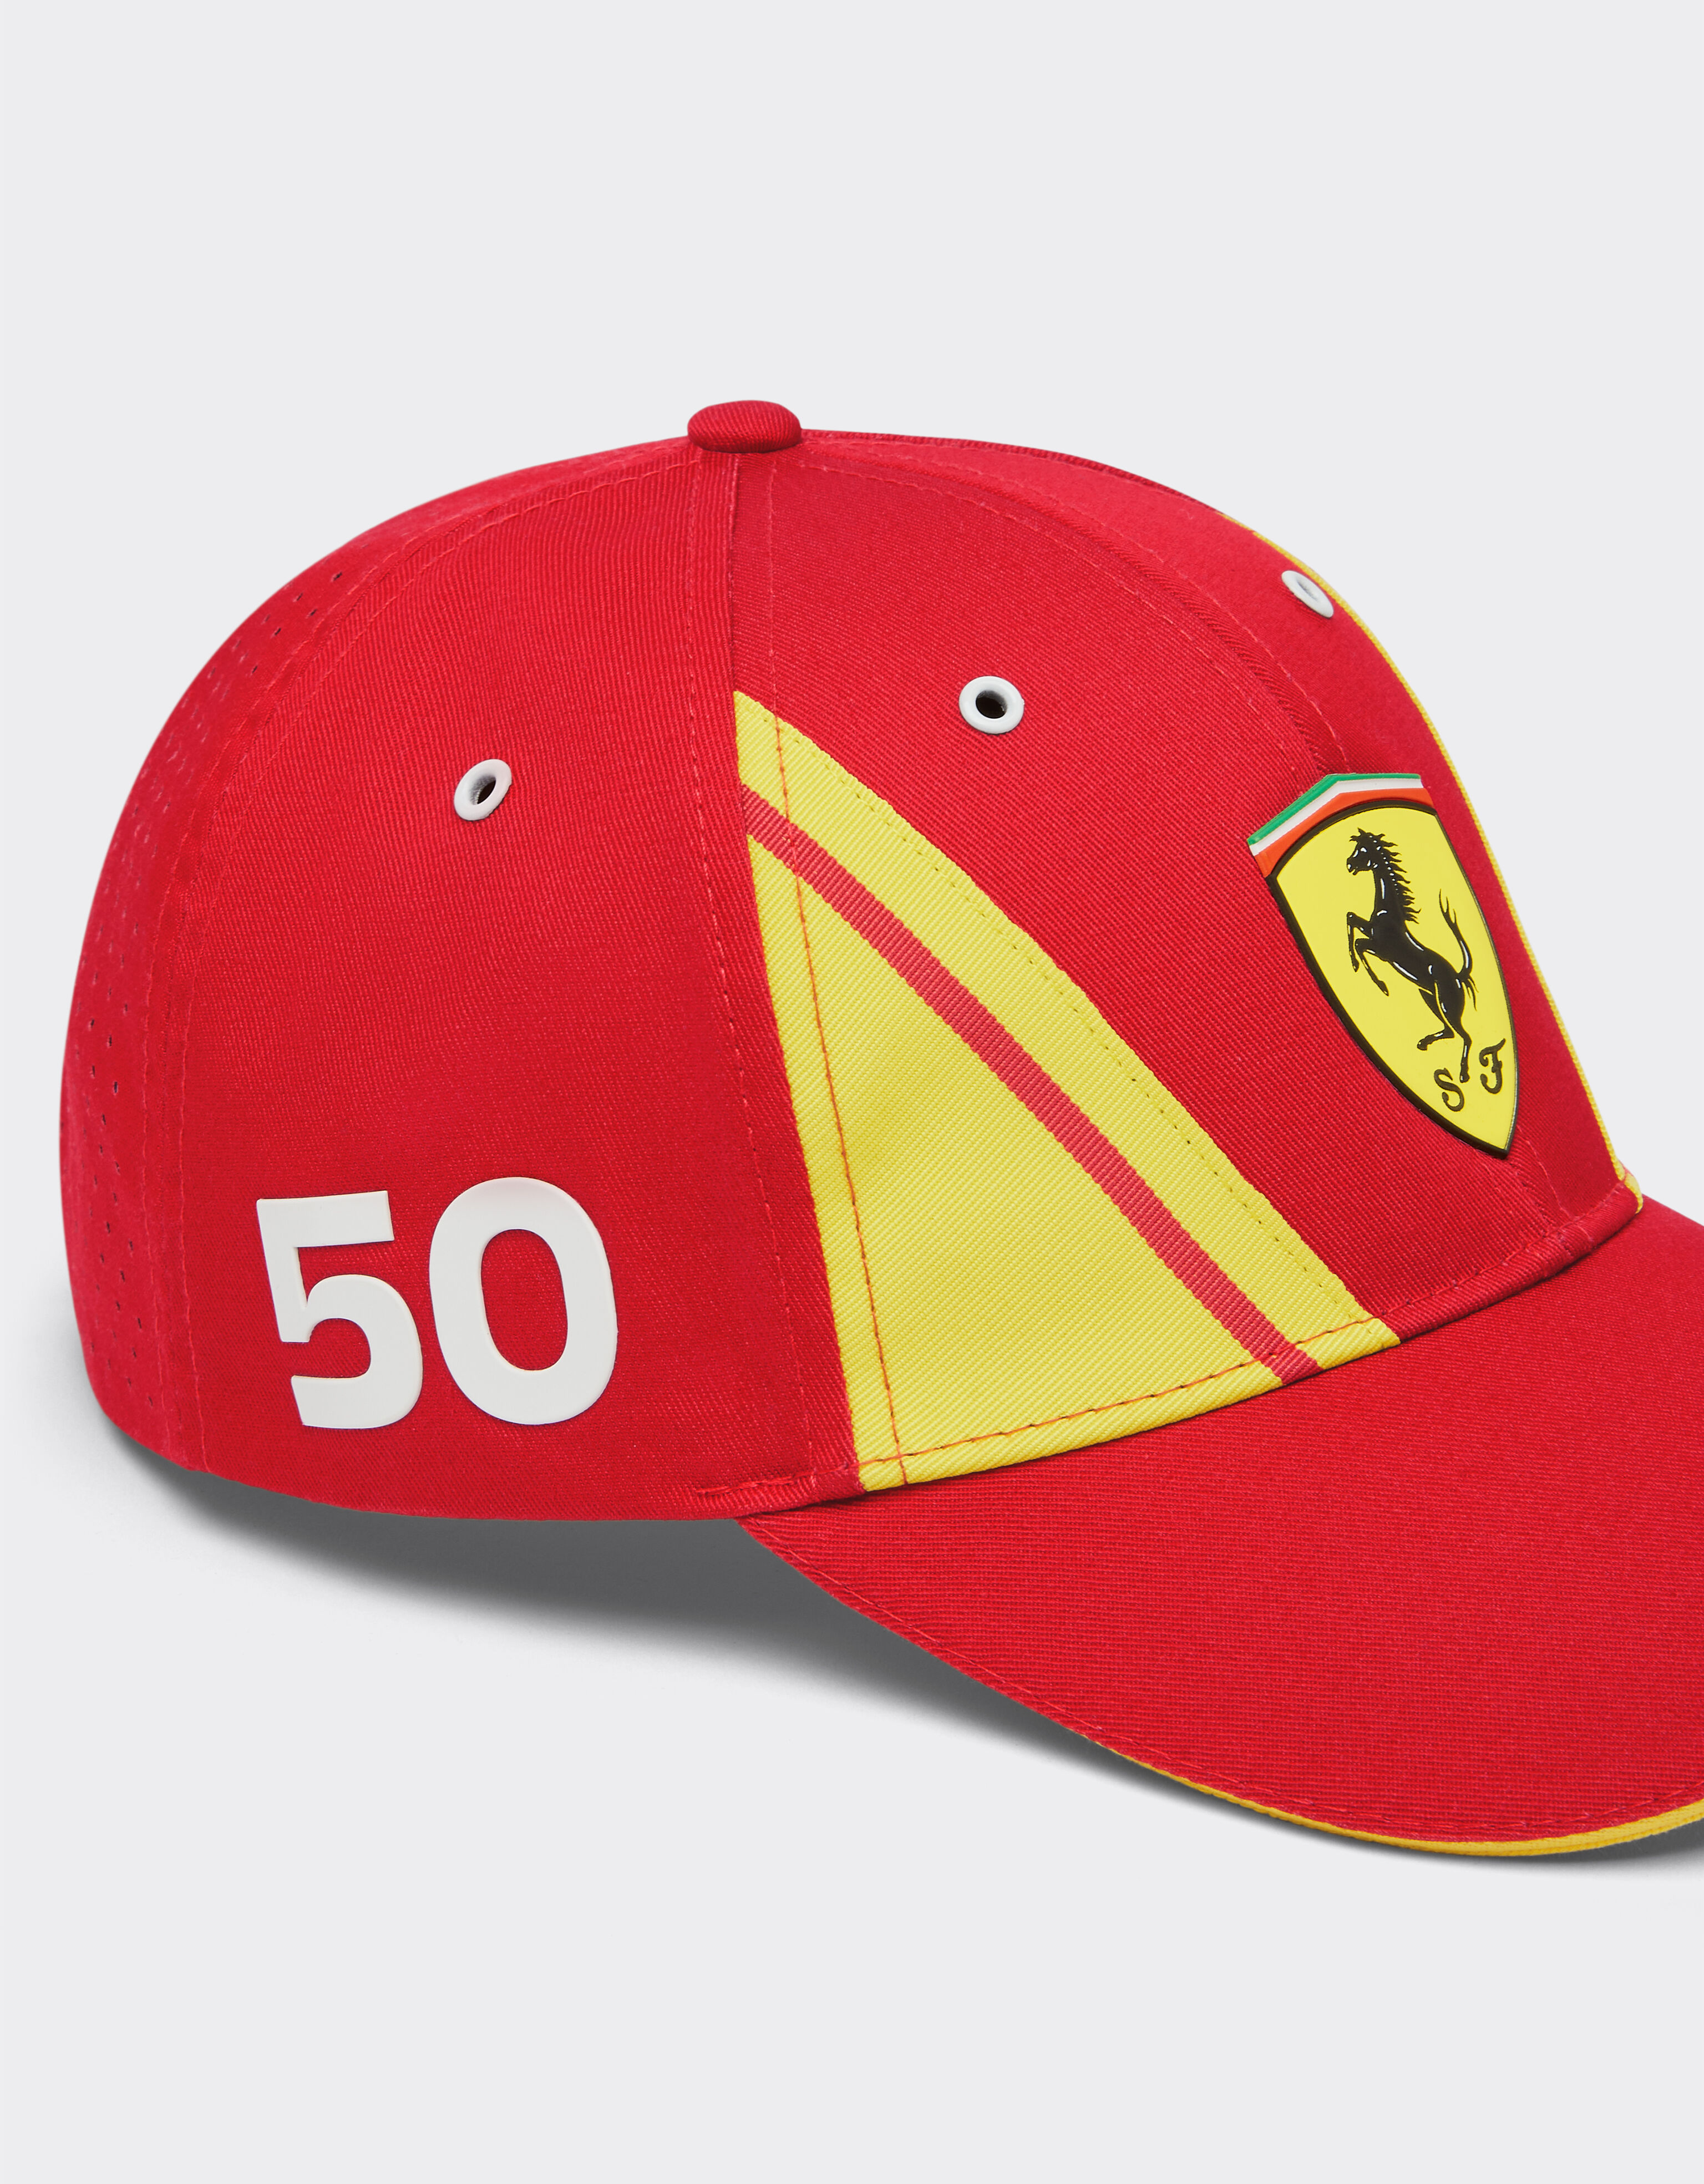 Ferrari Ferrari 50 Hypercar Hat Red F1329f